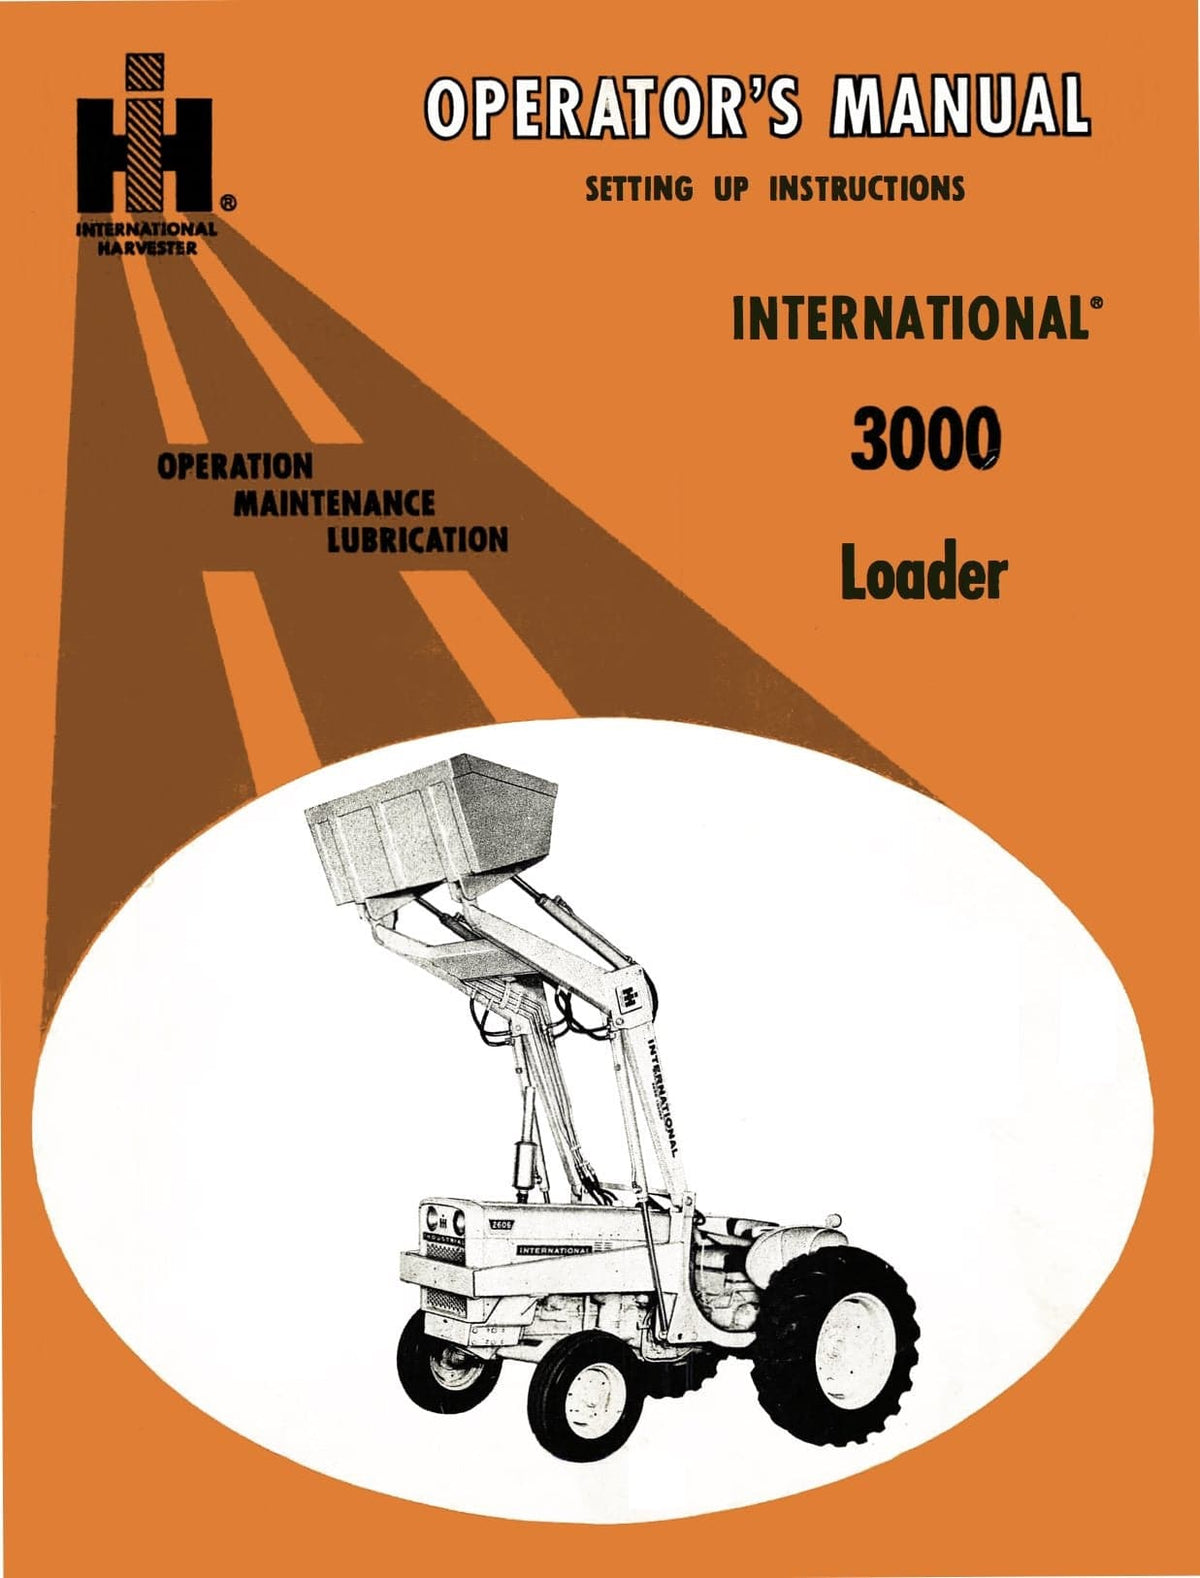 International 3000 Loader - Operator's Manual - Ag Manuals - A Provider of Digital Farm Manuals - 1